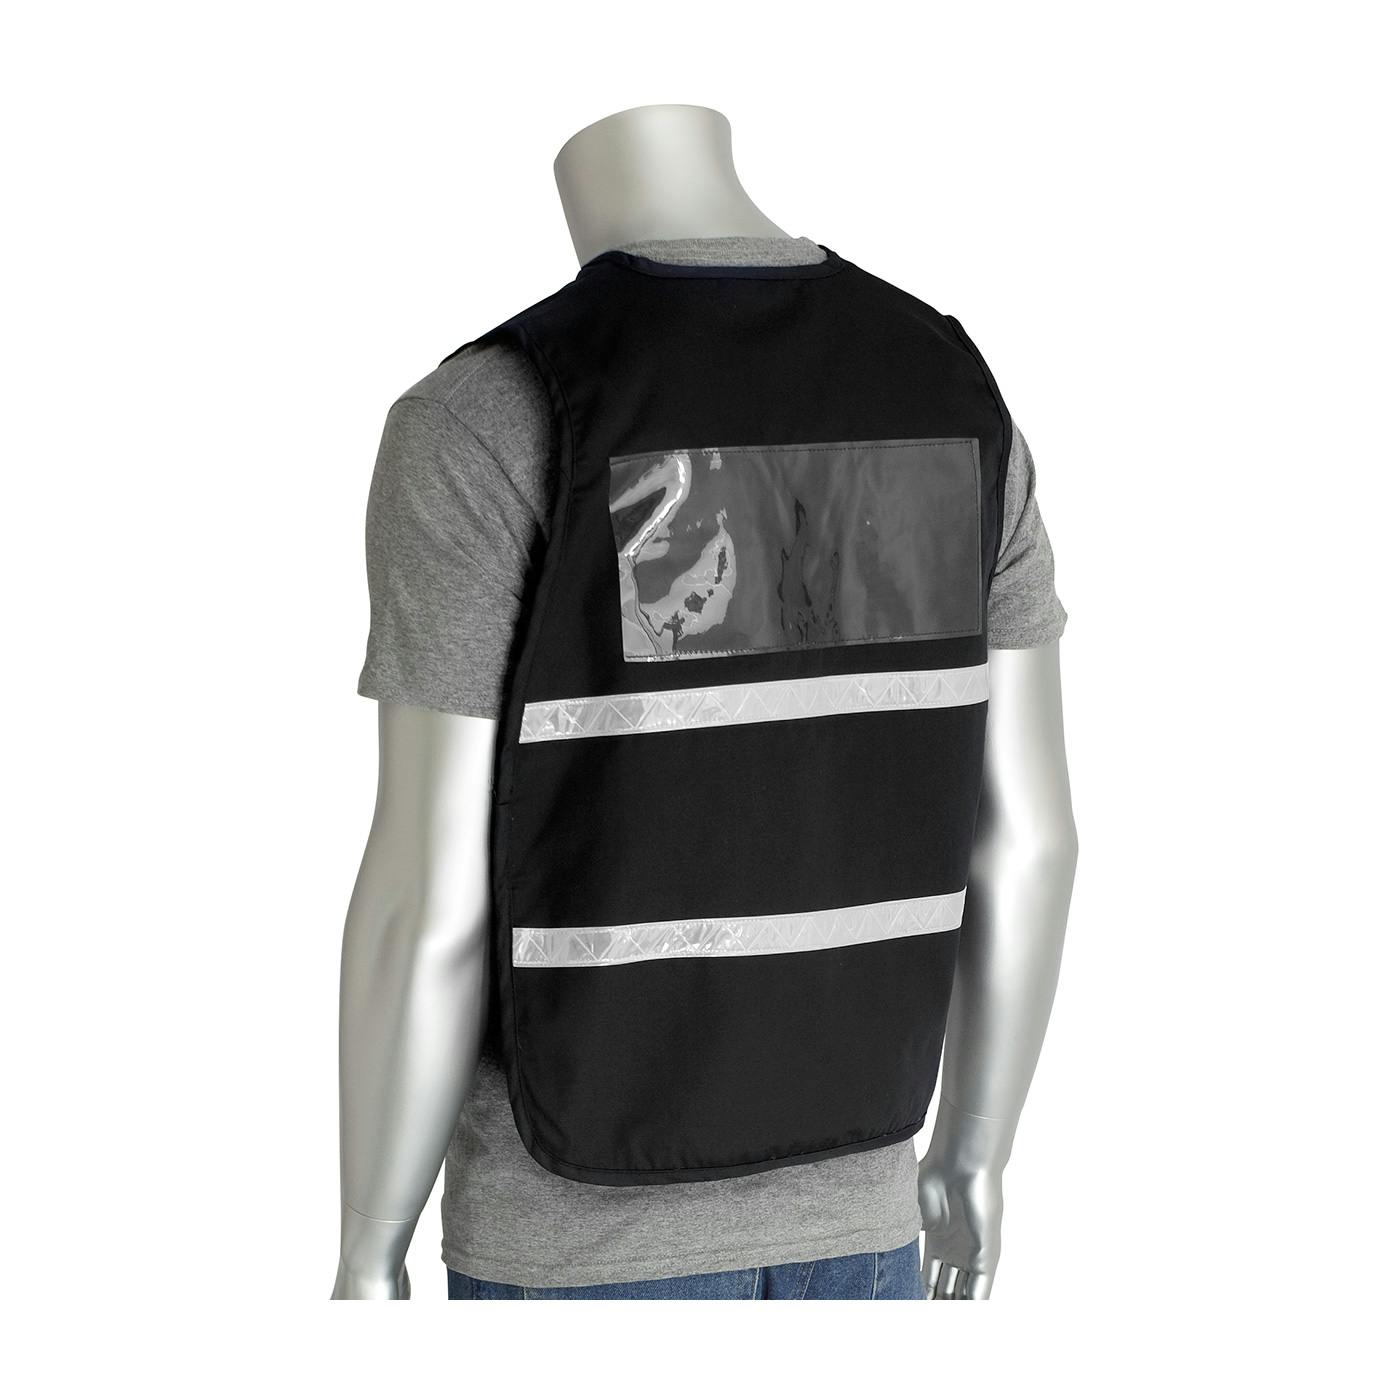 Non-ANSI Incident Command Vest - Cotton/Polyester Blend, Black (300-2502)